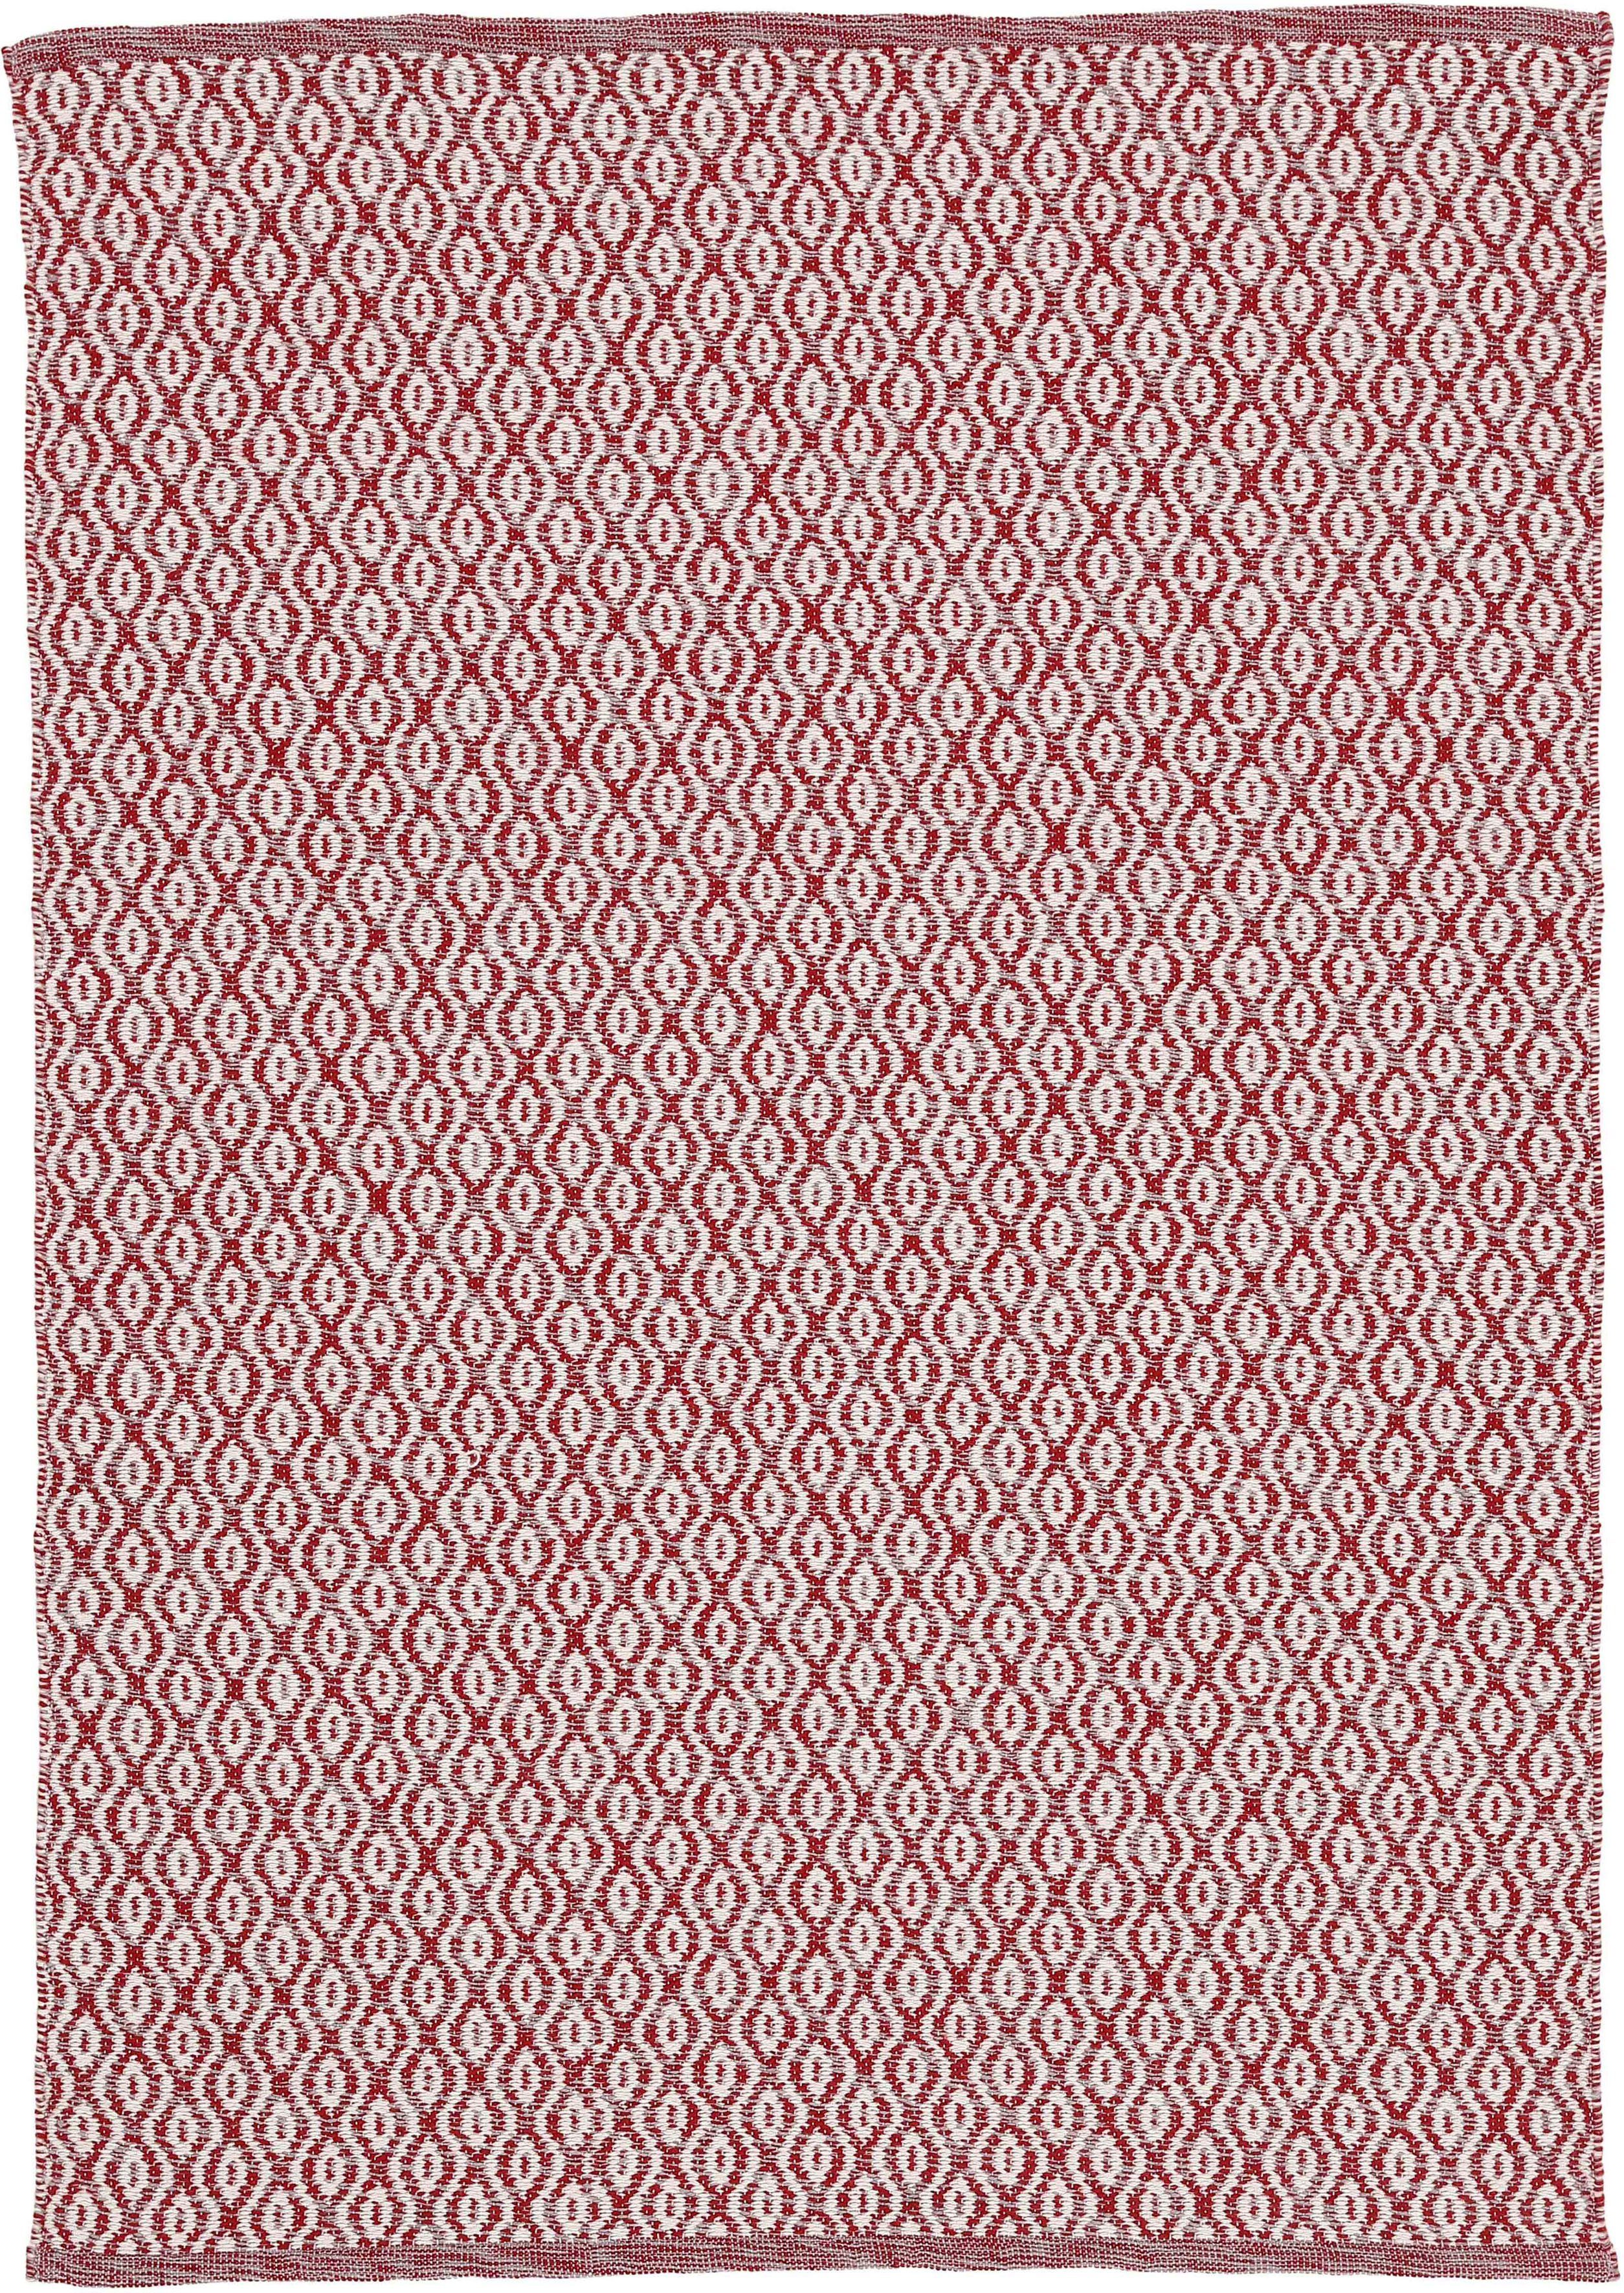 Teppich Frida 202, carpetfine, rechteckig, Höhe: 7 mm, Wendeteppich, 100% recyceltem  Material (PET), Flachgewebe, Sisal Optik